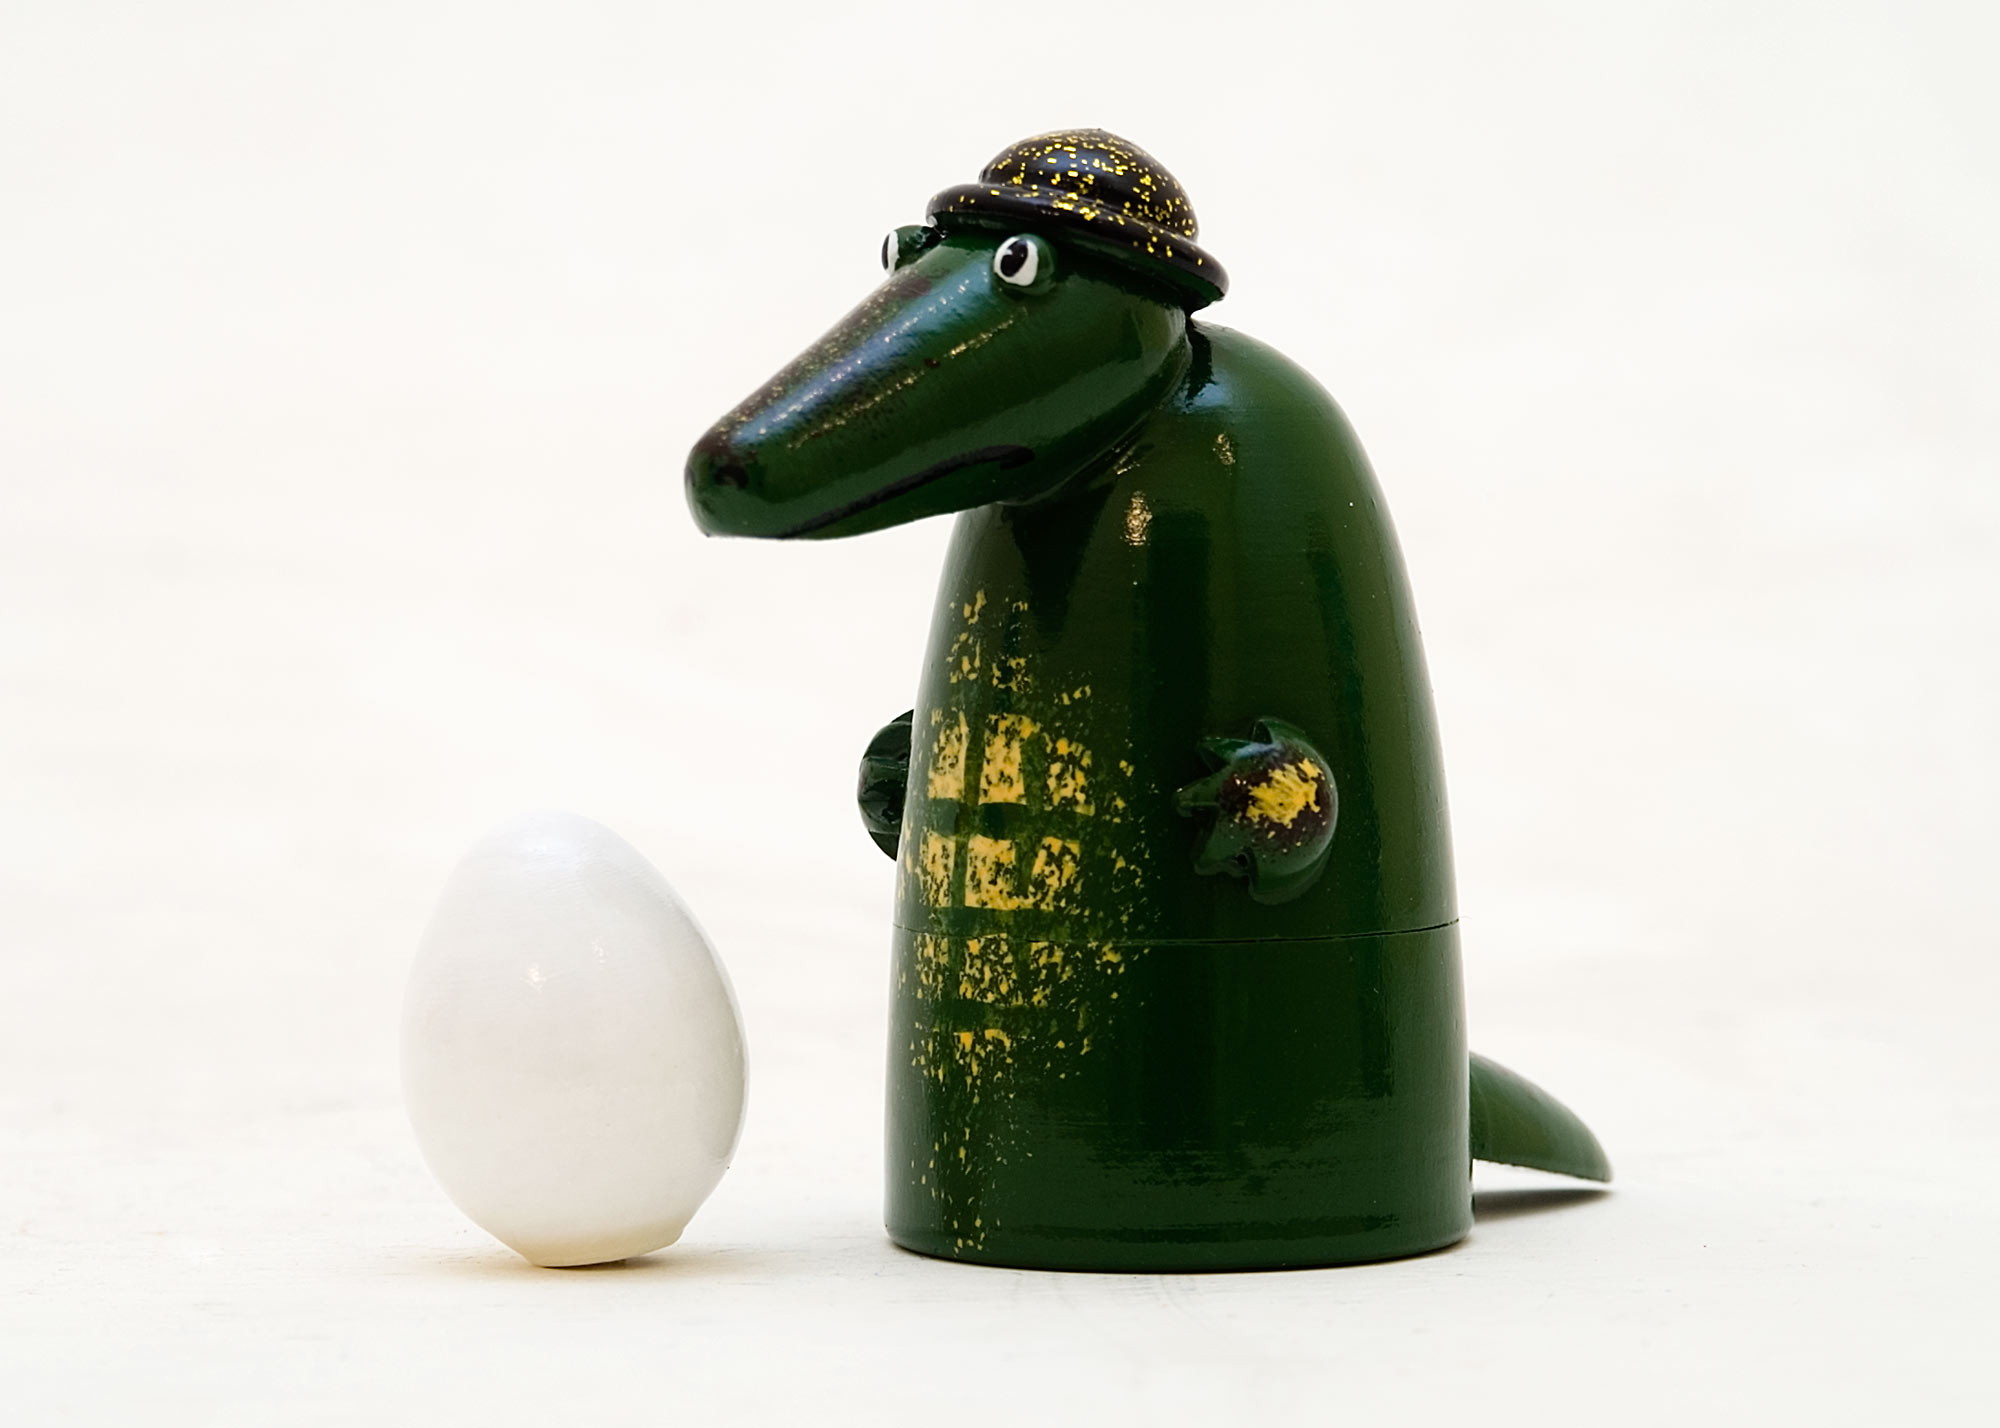 Buy Alligator w/ Egg Doll 2pc./3" at GoldenCockerel.com